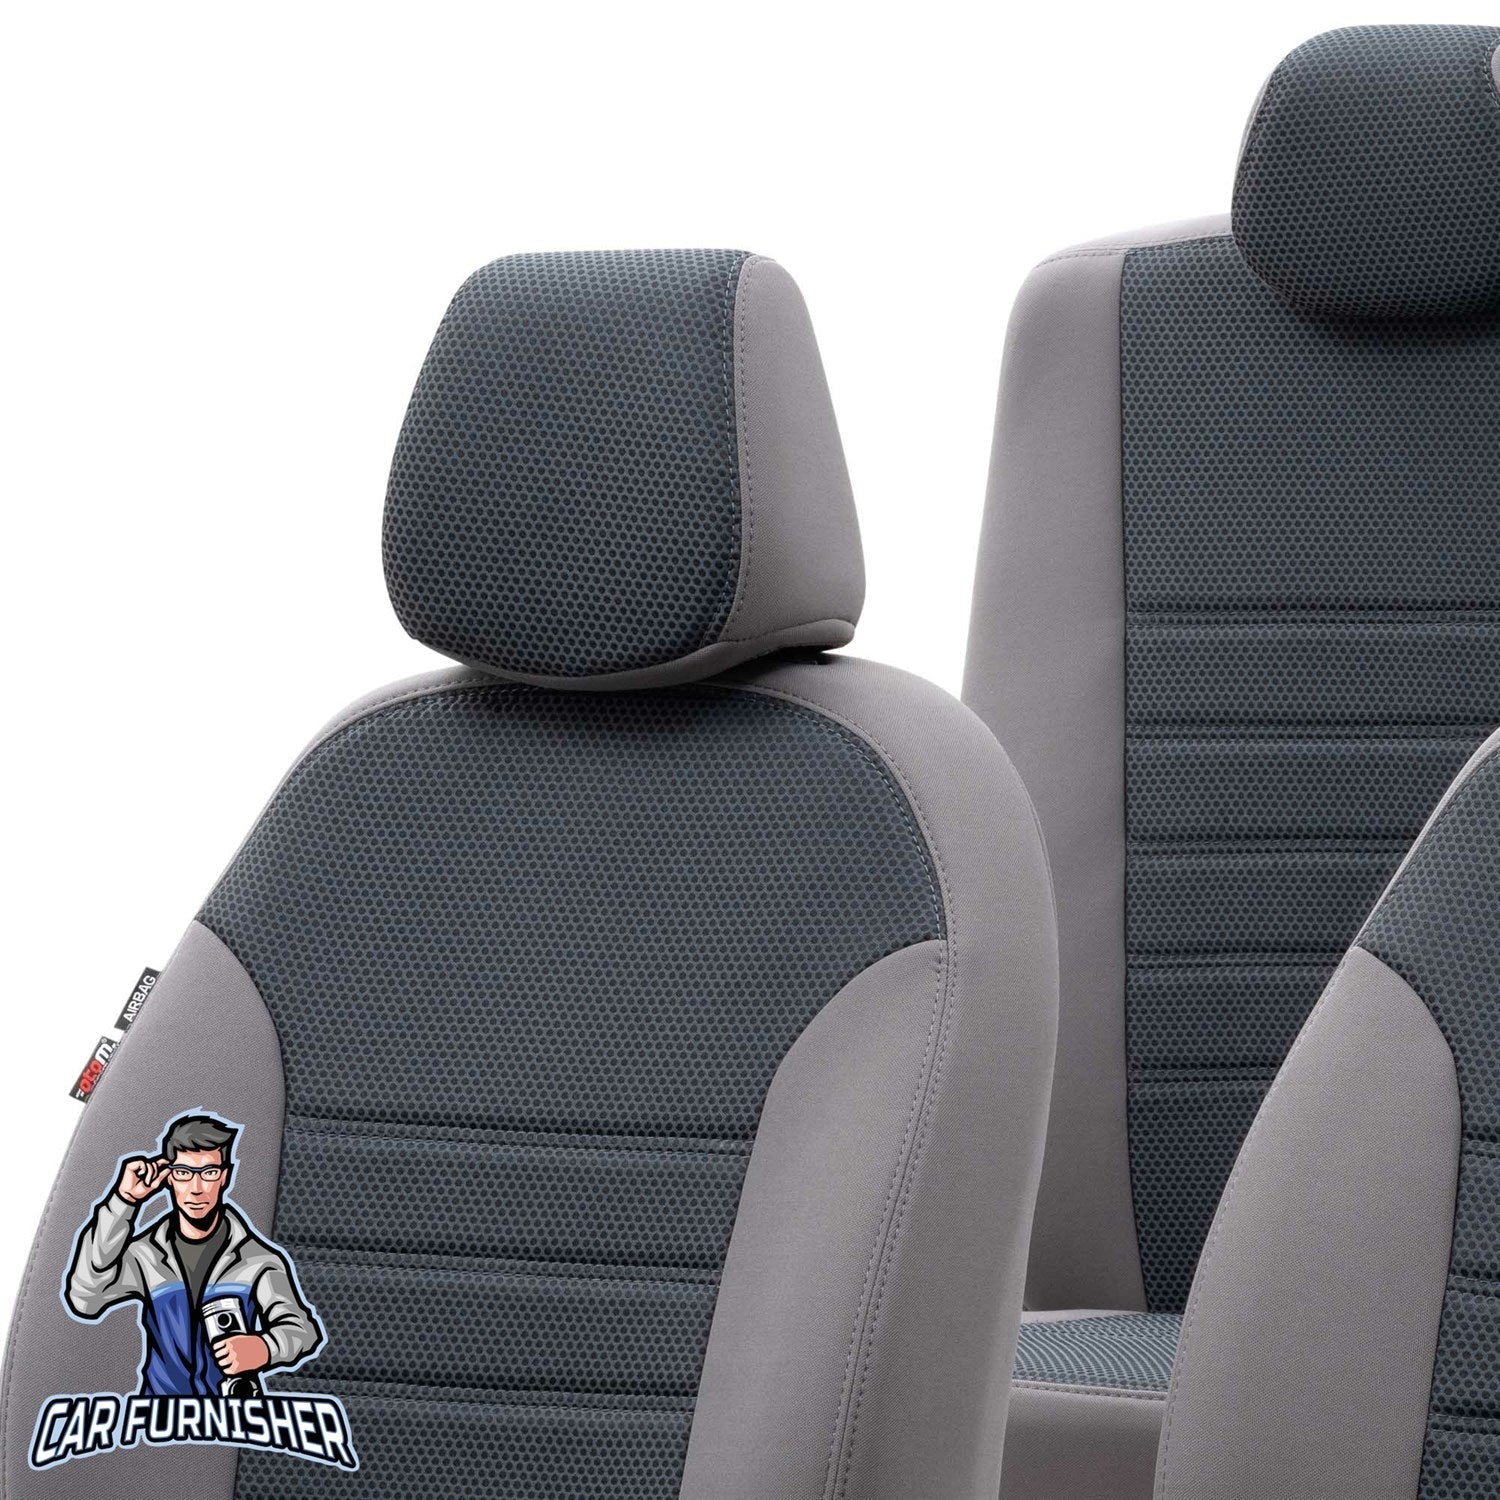 Peugeot Rifter Seat Covers Original Jacquard Design Smoked Jacquard Fabric